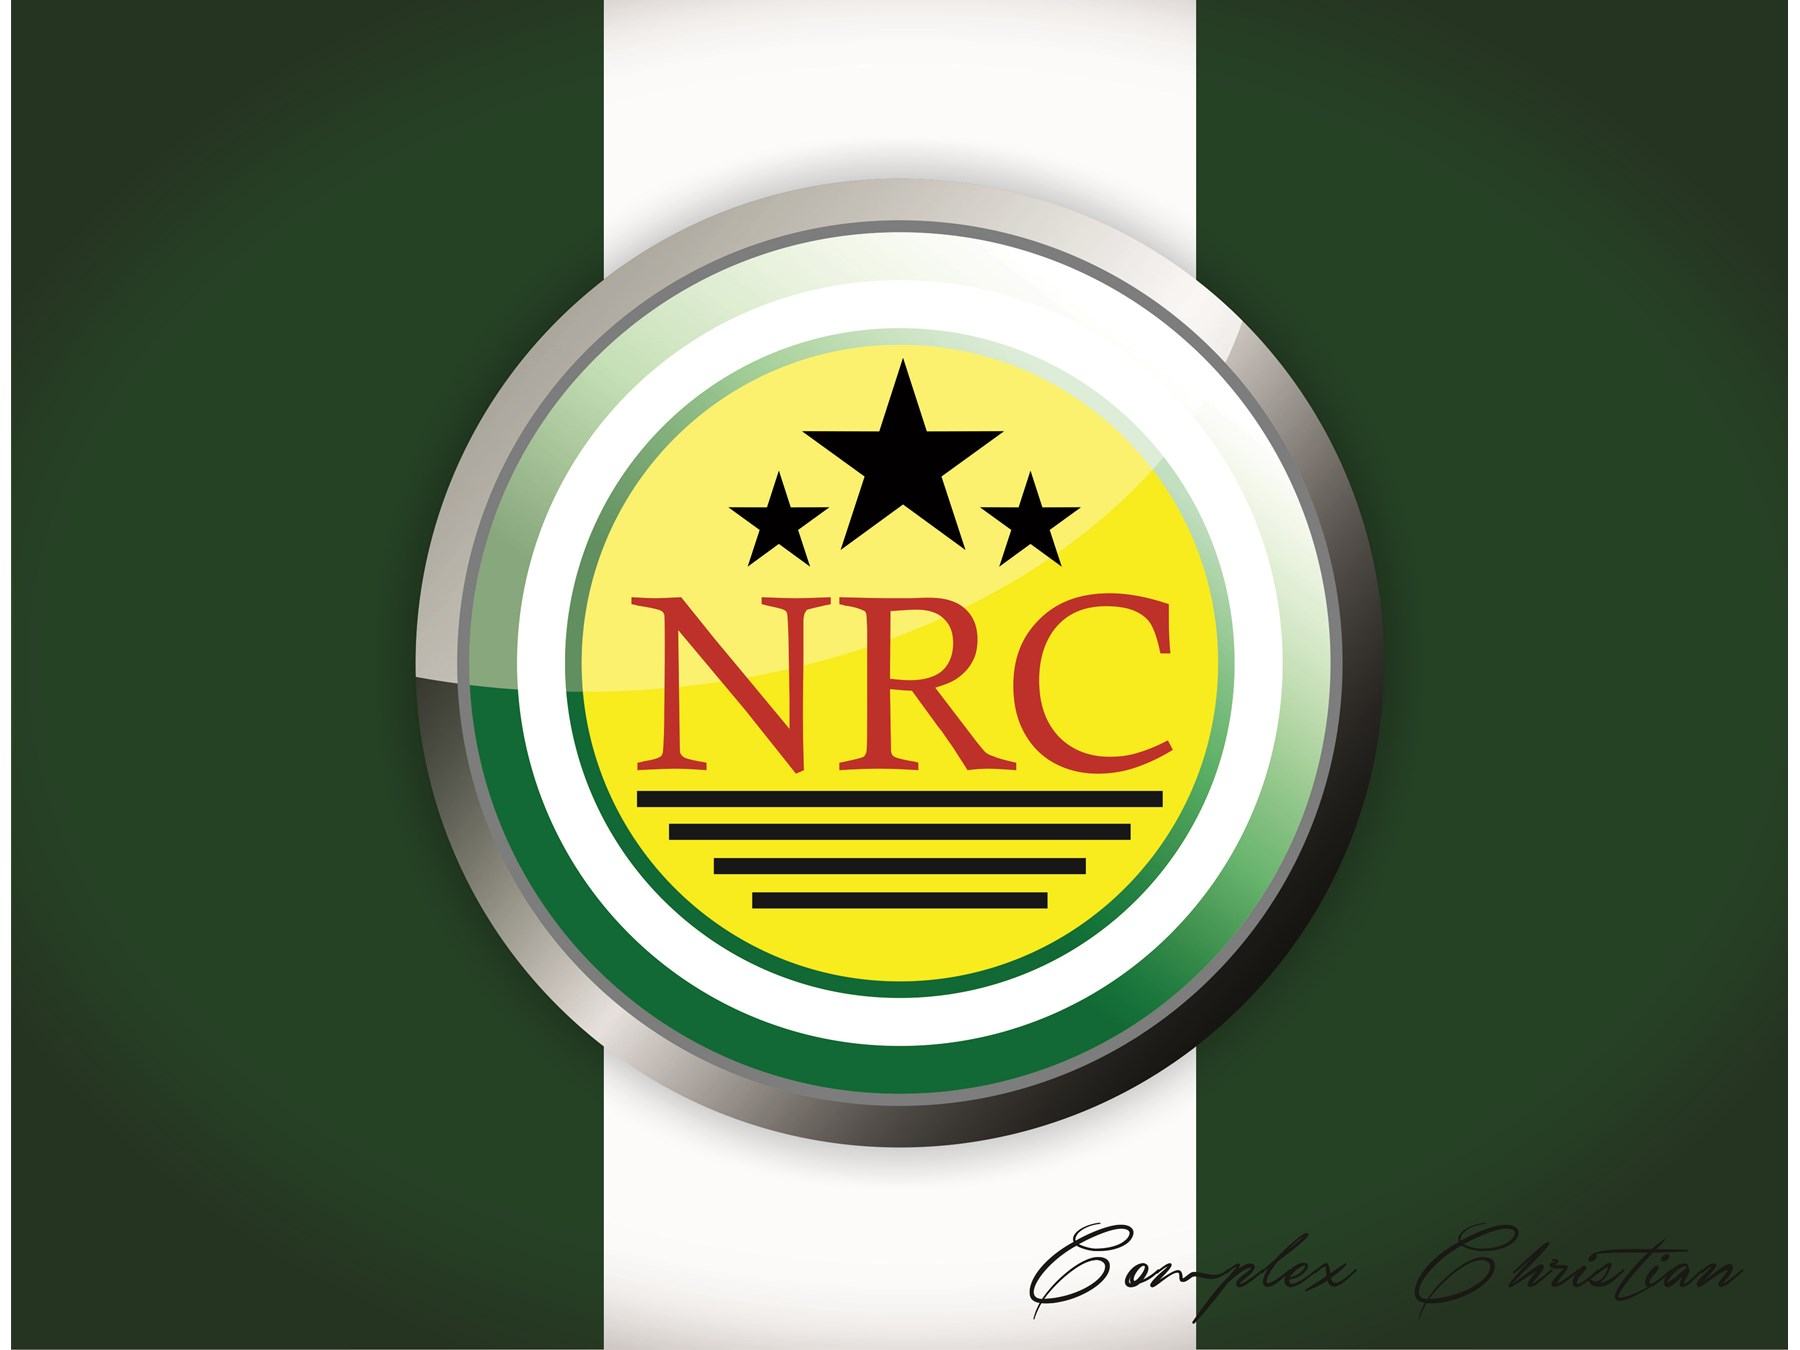 The Nigerian Railway Corporation (NRC)